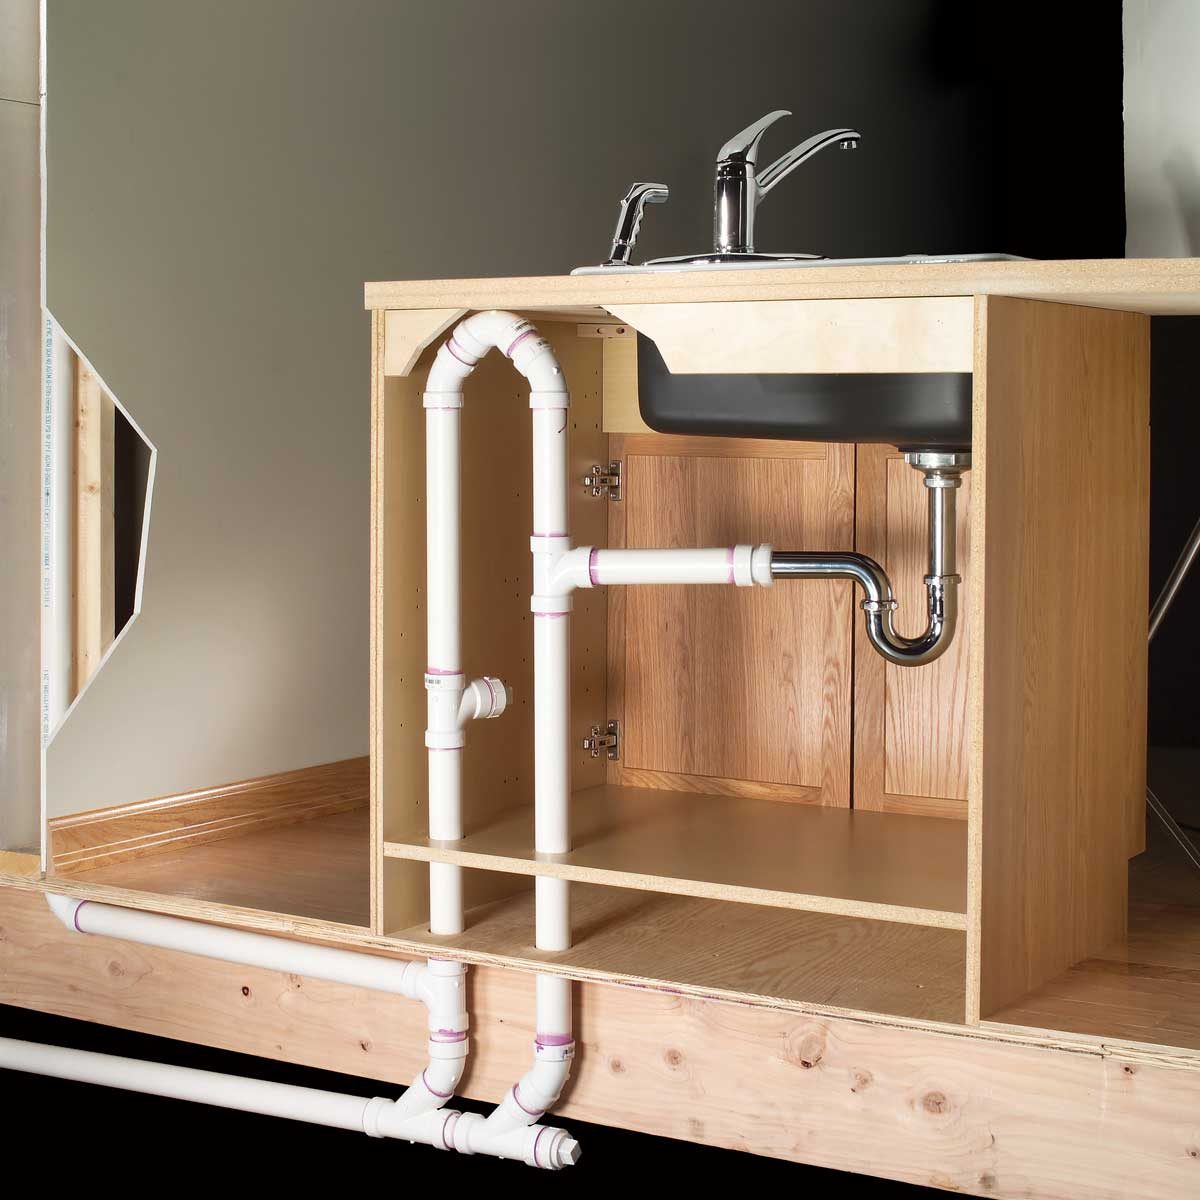 How to Plumb an Island Sink | Family Handyman wiring a bathroom wet wall 